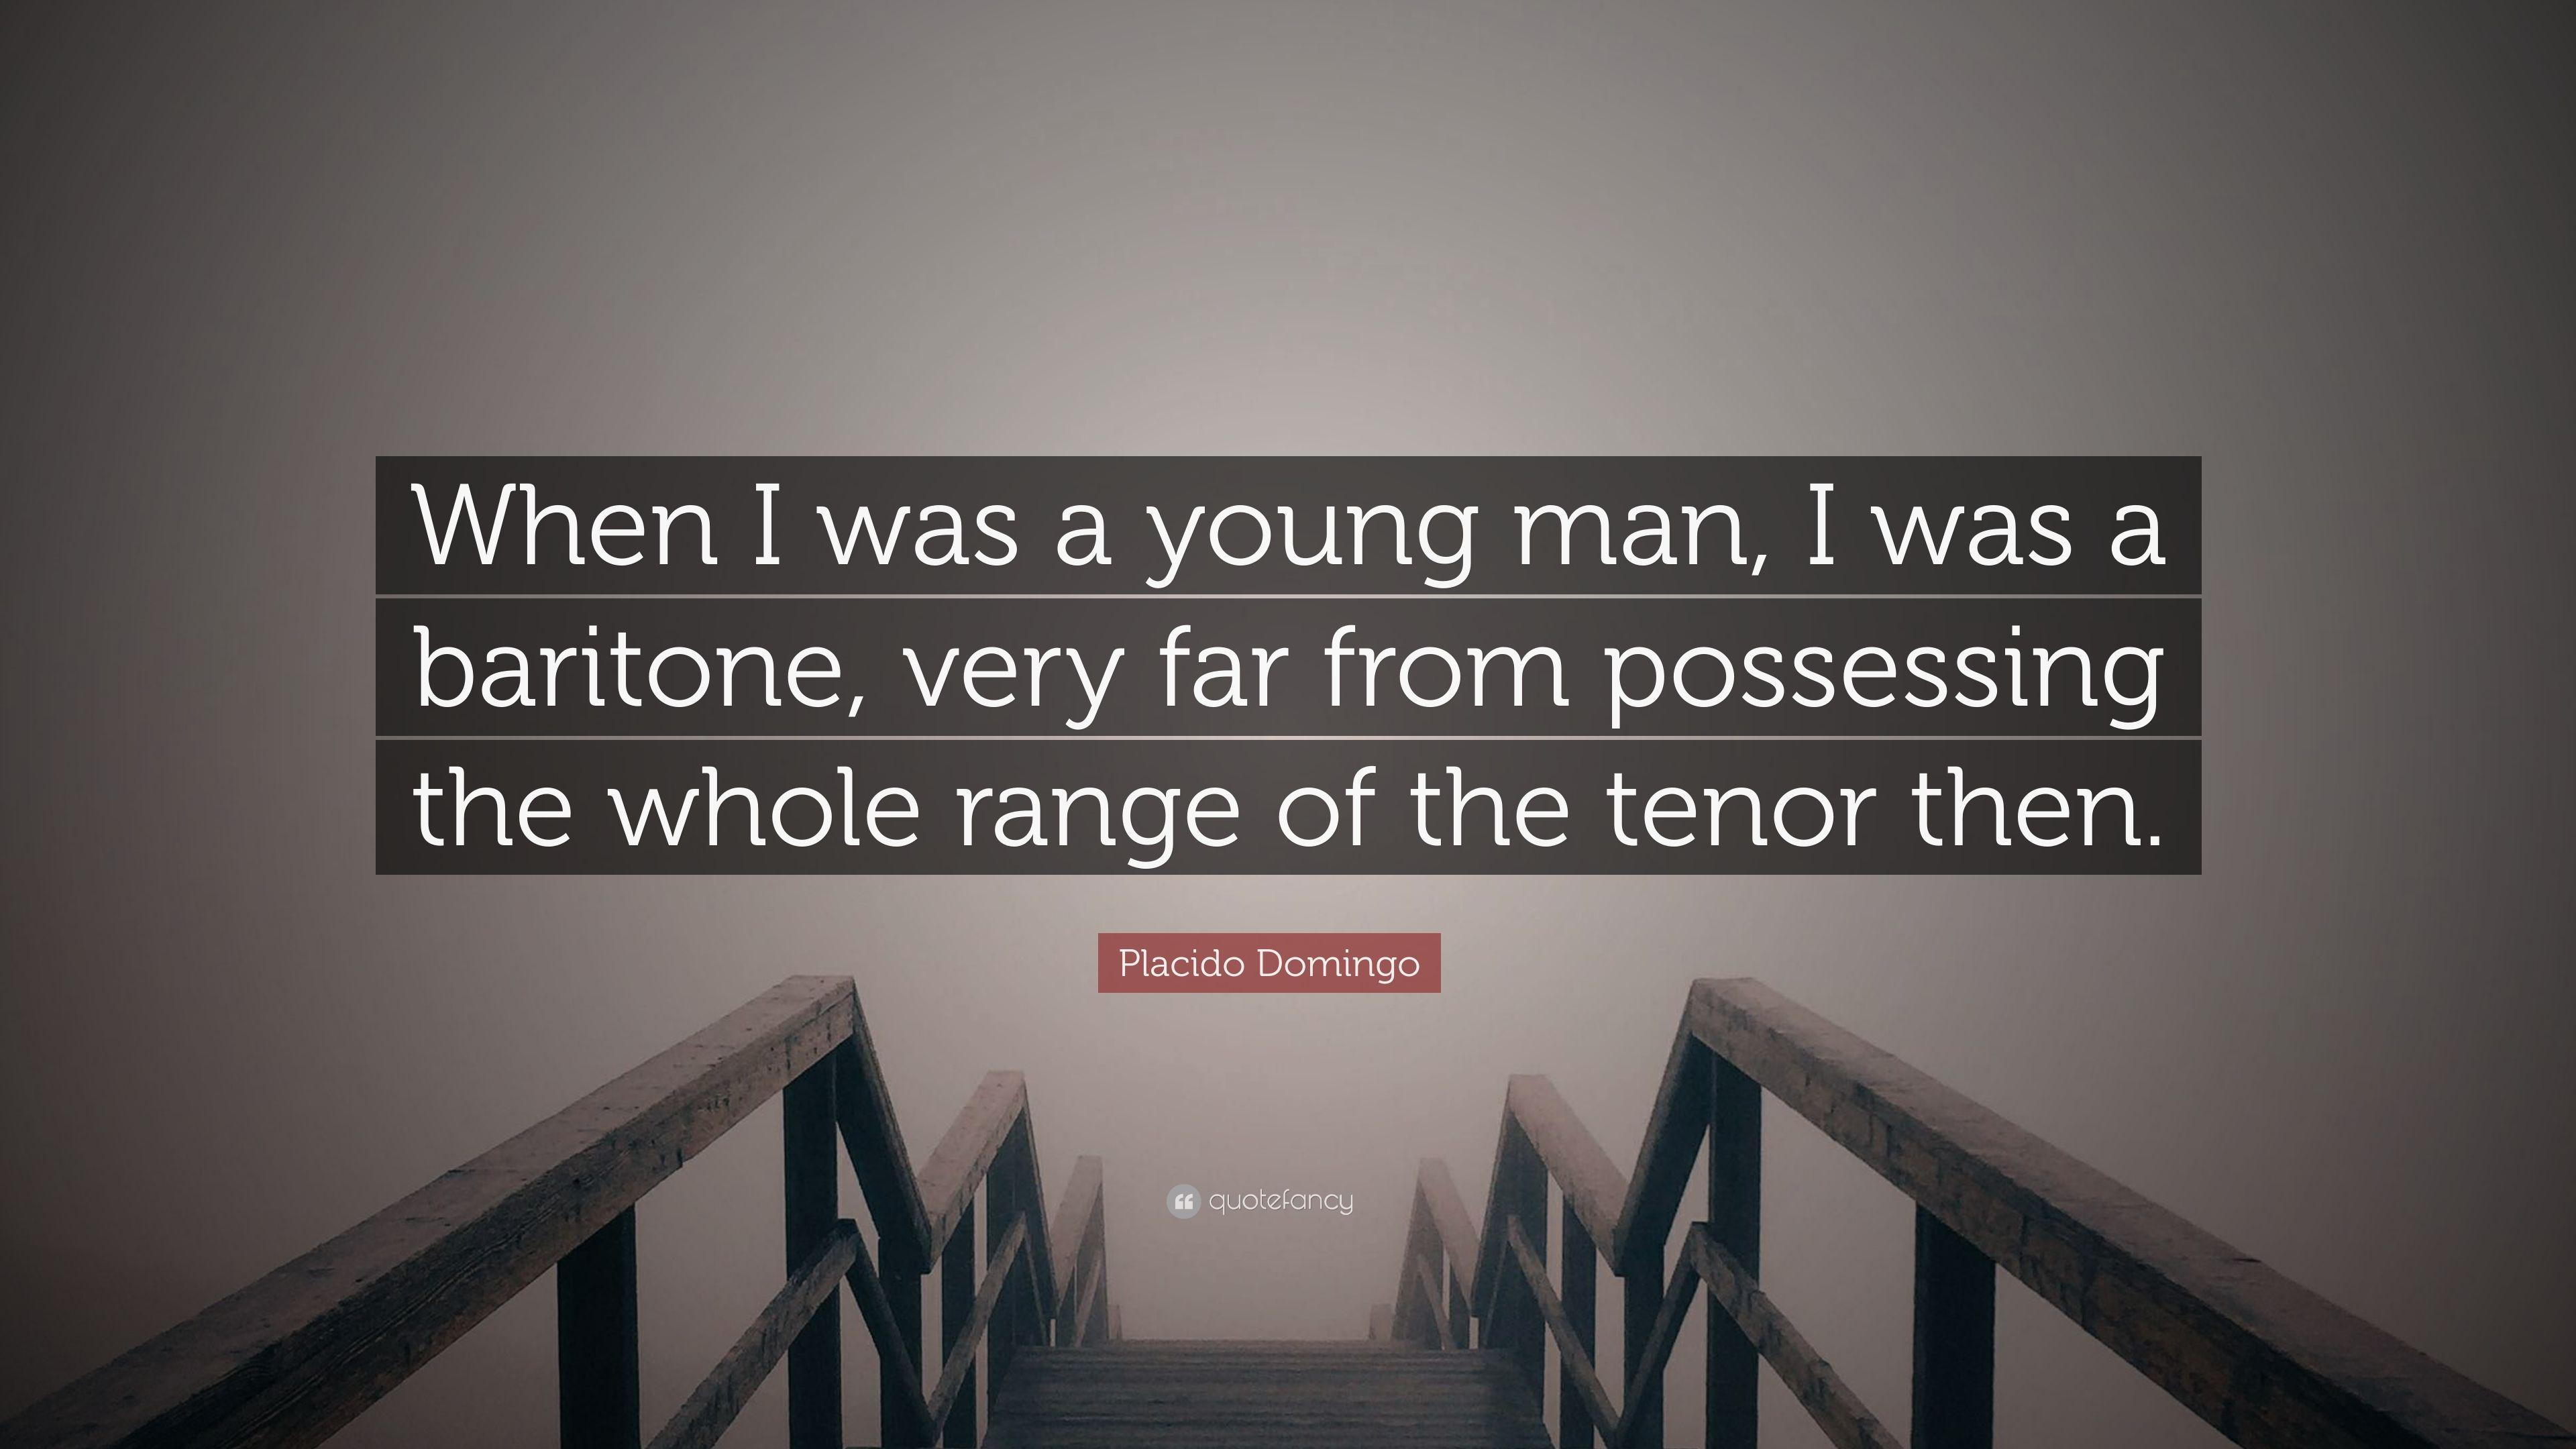 Placido Domingo Quote: “When I was a young man, I was a baritone